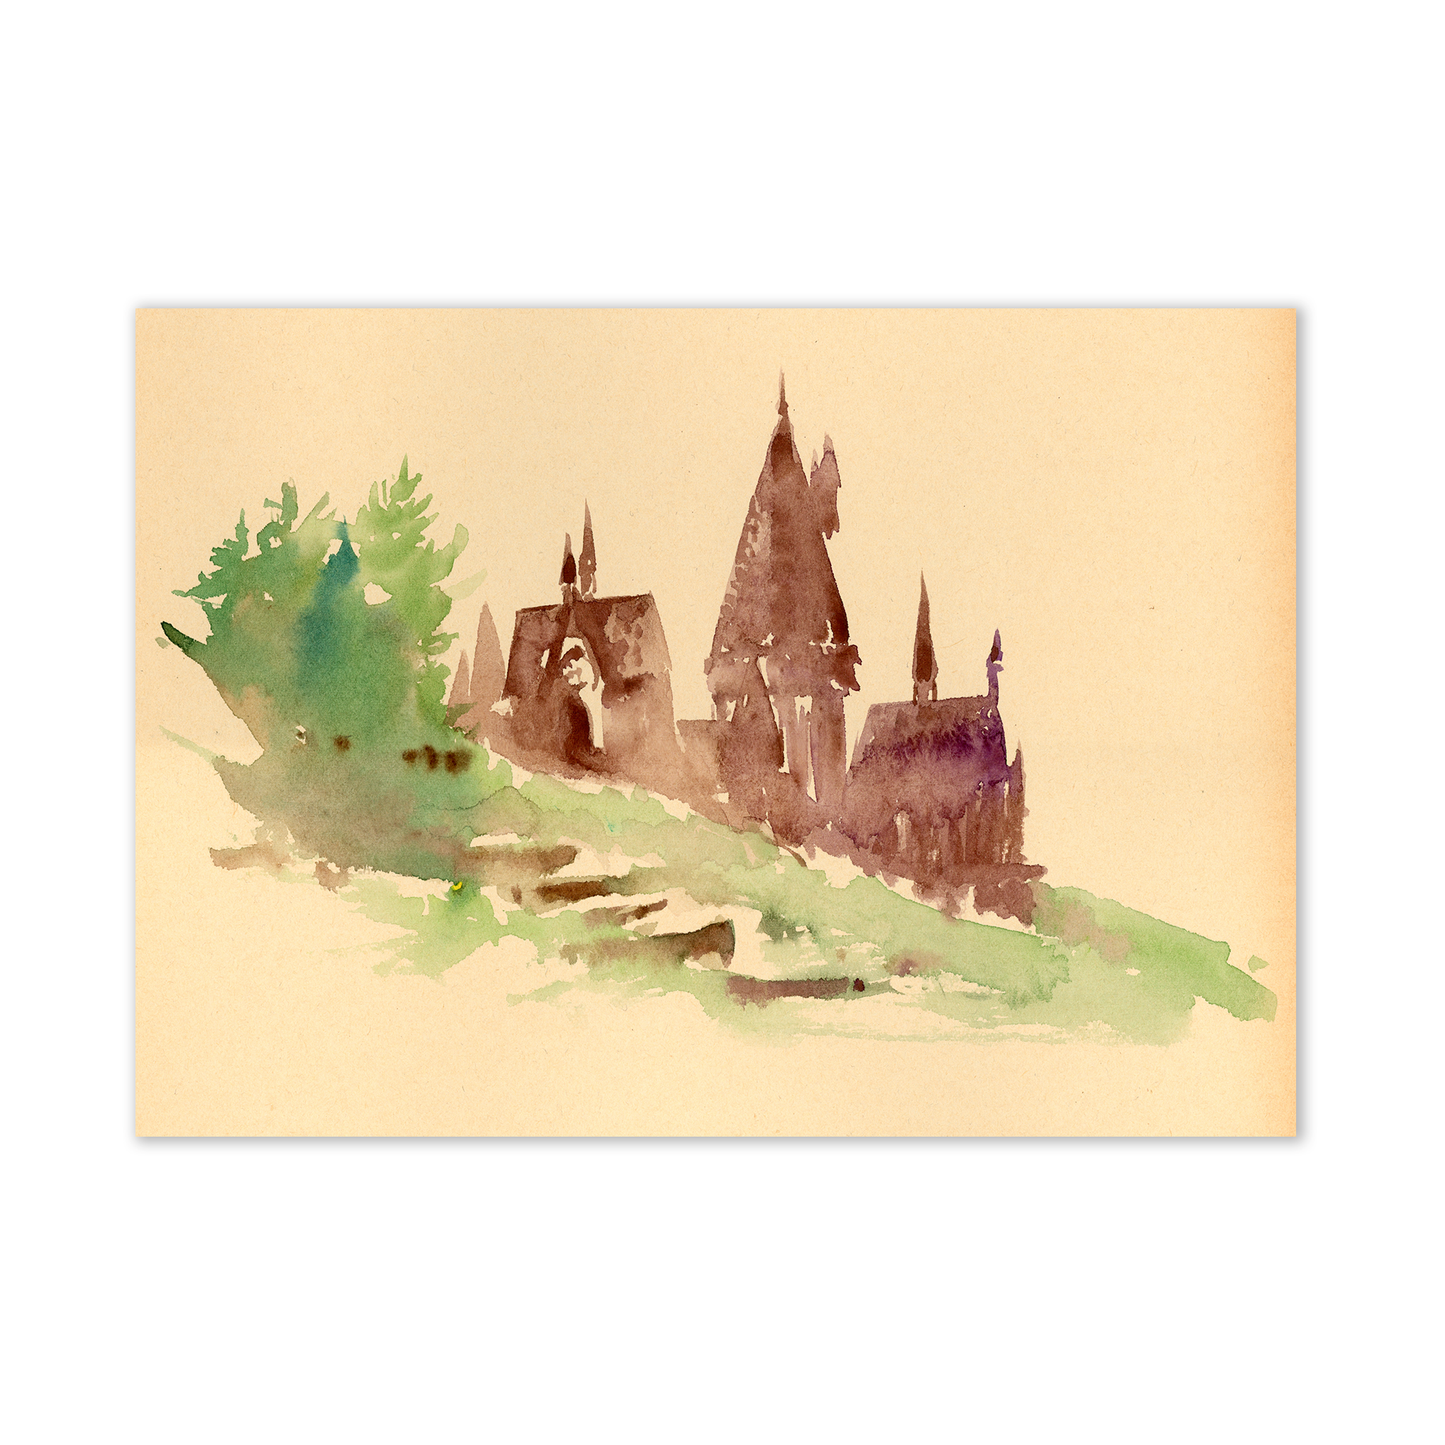 Muggle Sketches Bundle 1 - Set of 9 PRINTS 5x7